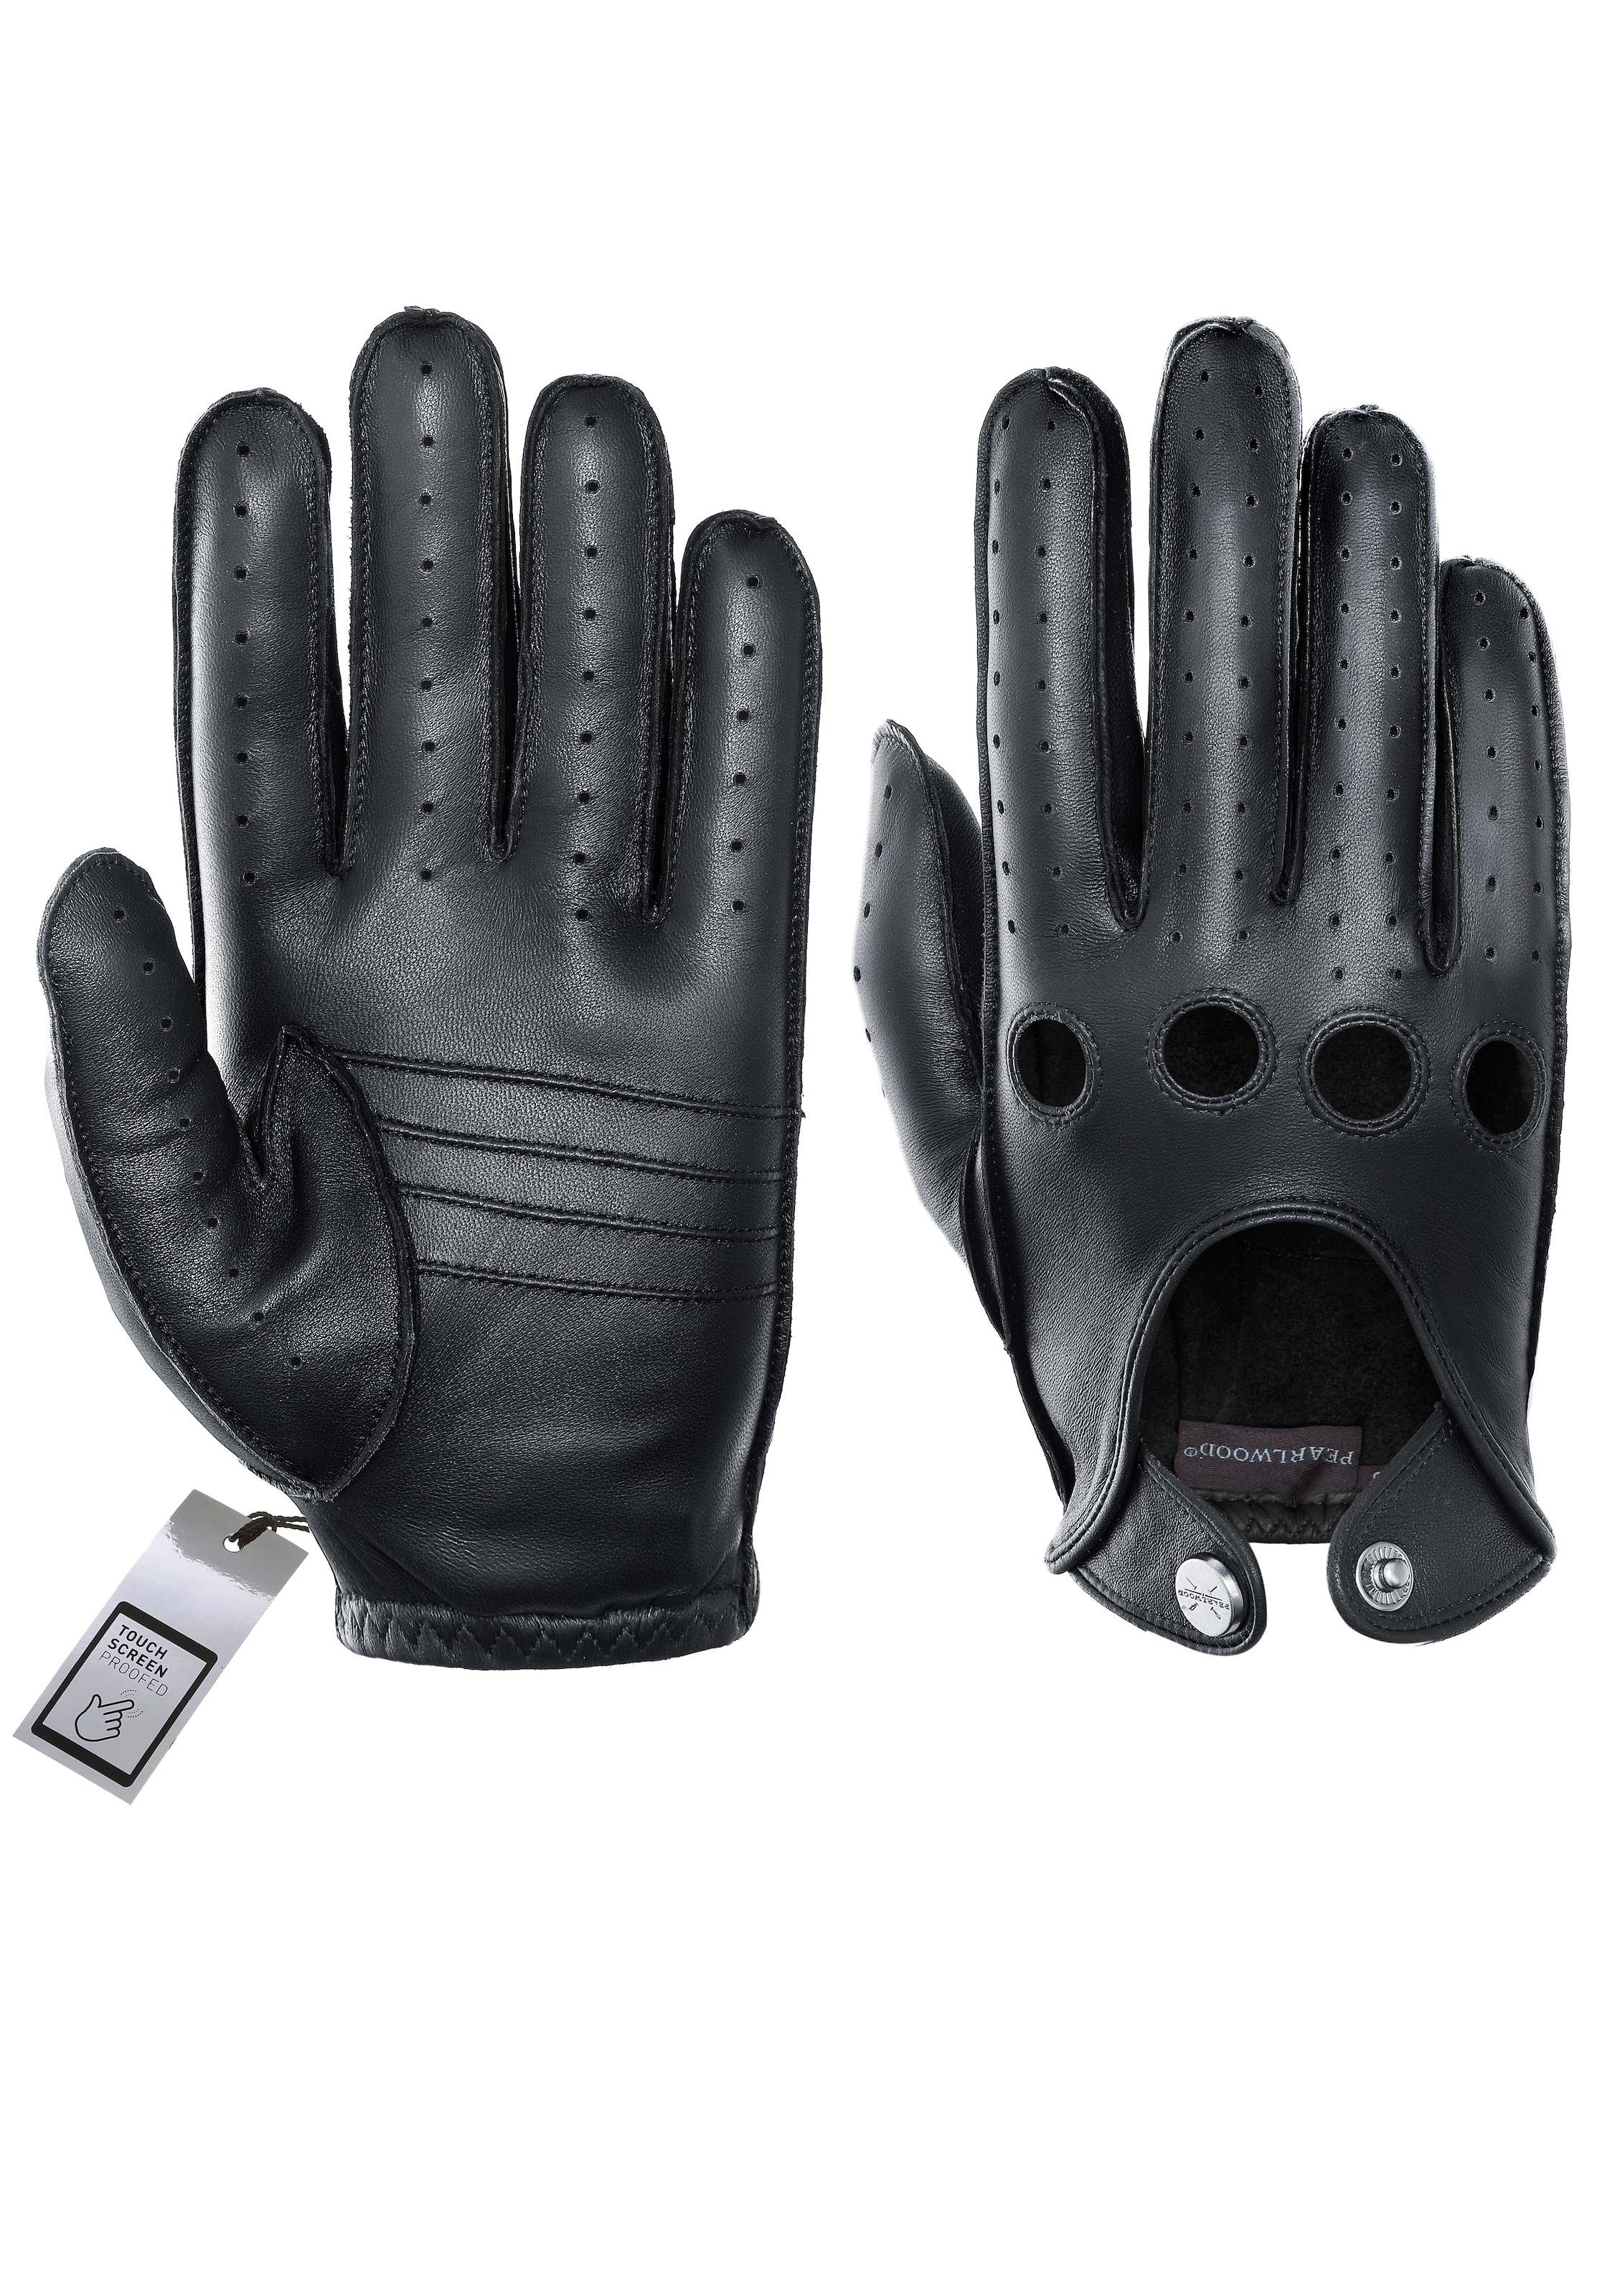 PEARLWOOD Lederhandschuhe, Autofahrerhandschuhe, sicherer Griff bei feuchten Händen